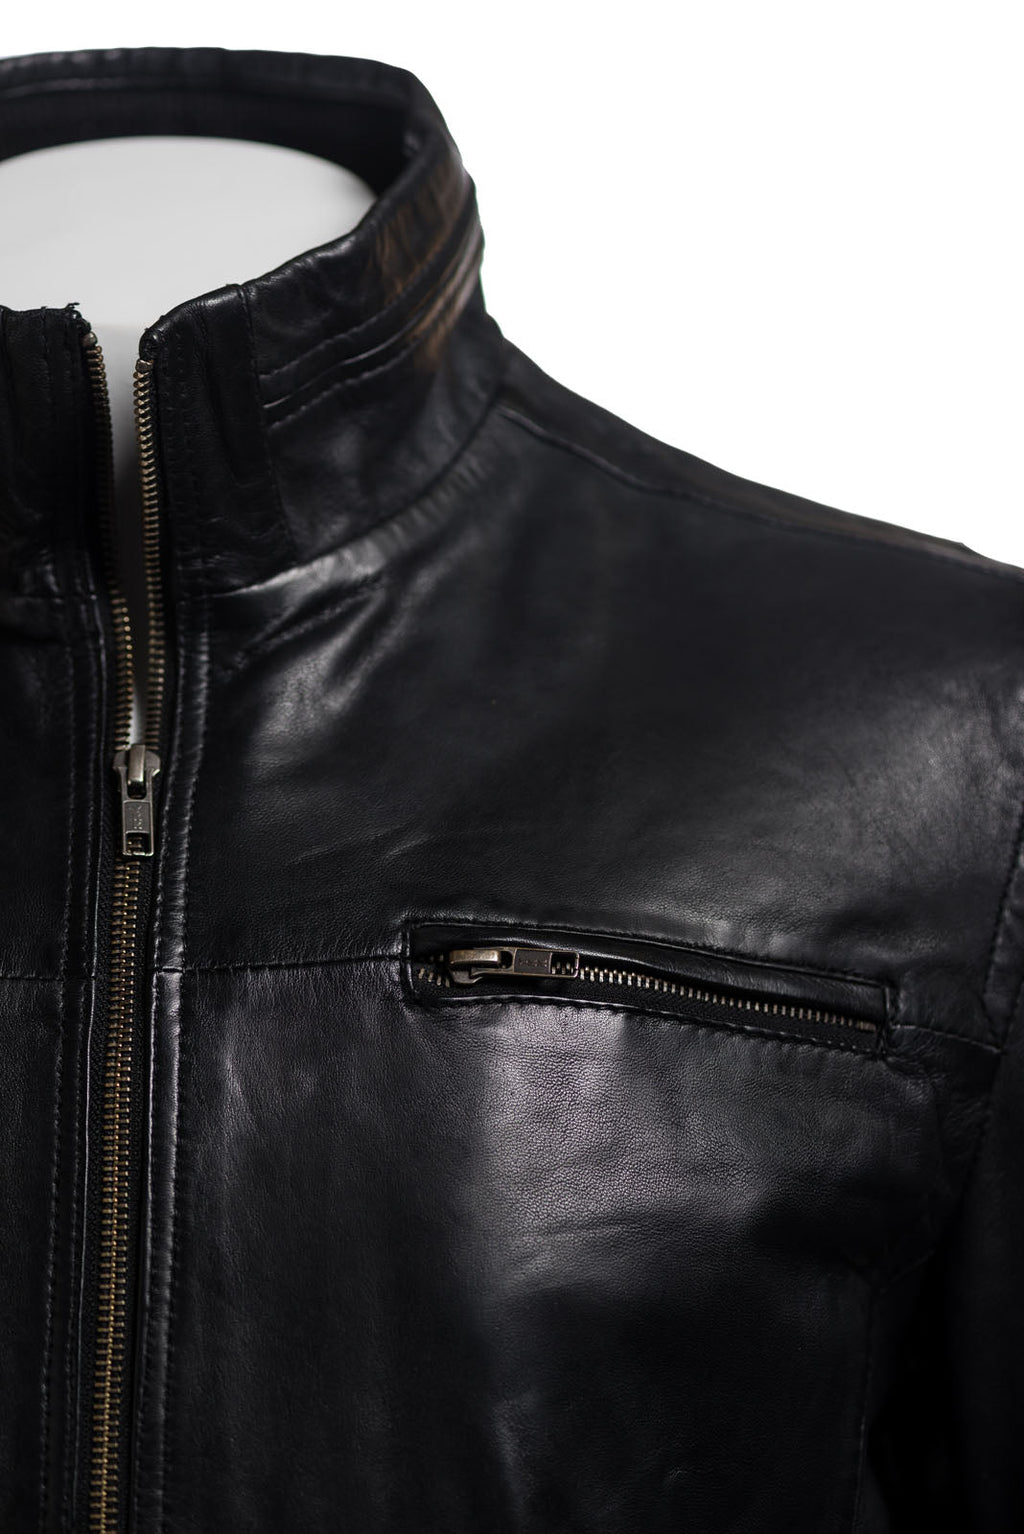 Men's Brown Funnel Neck Leather Jacket: Luigi